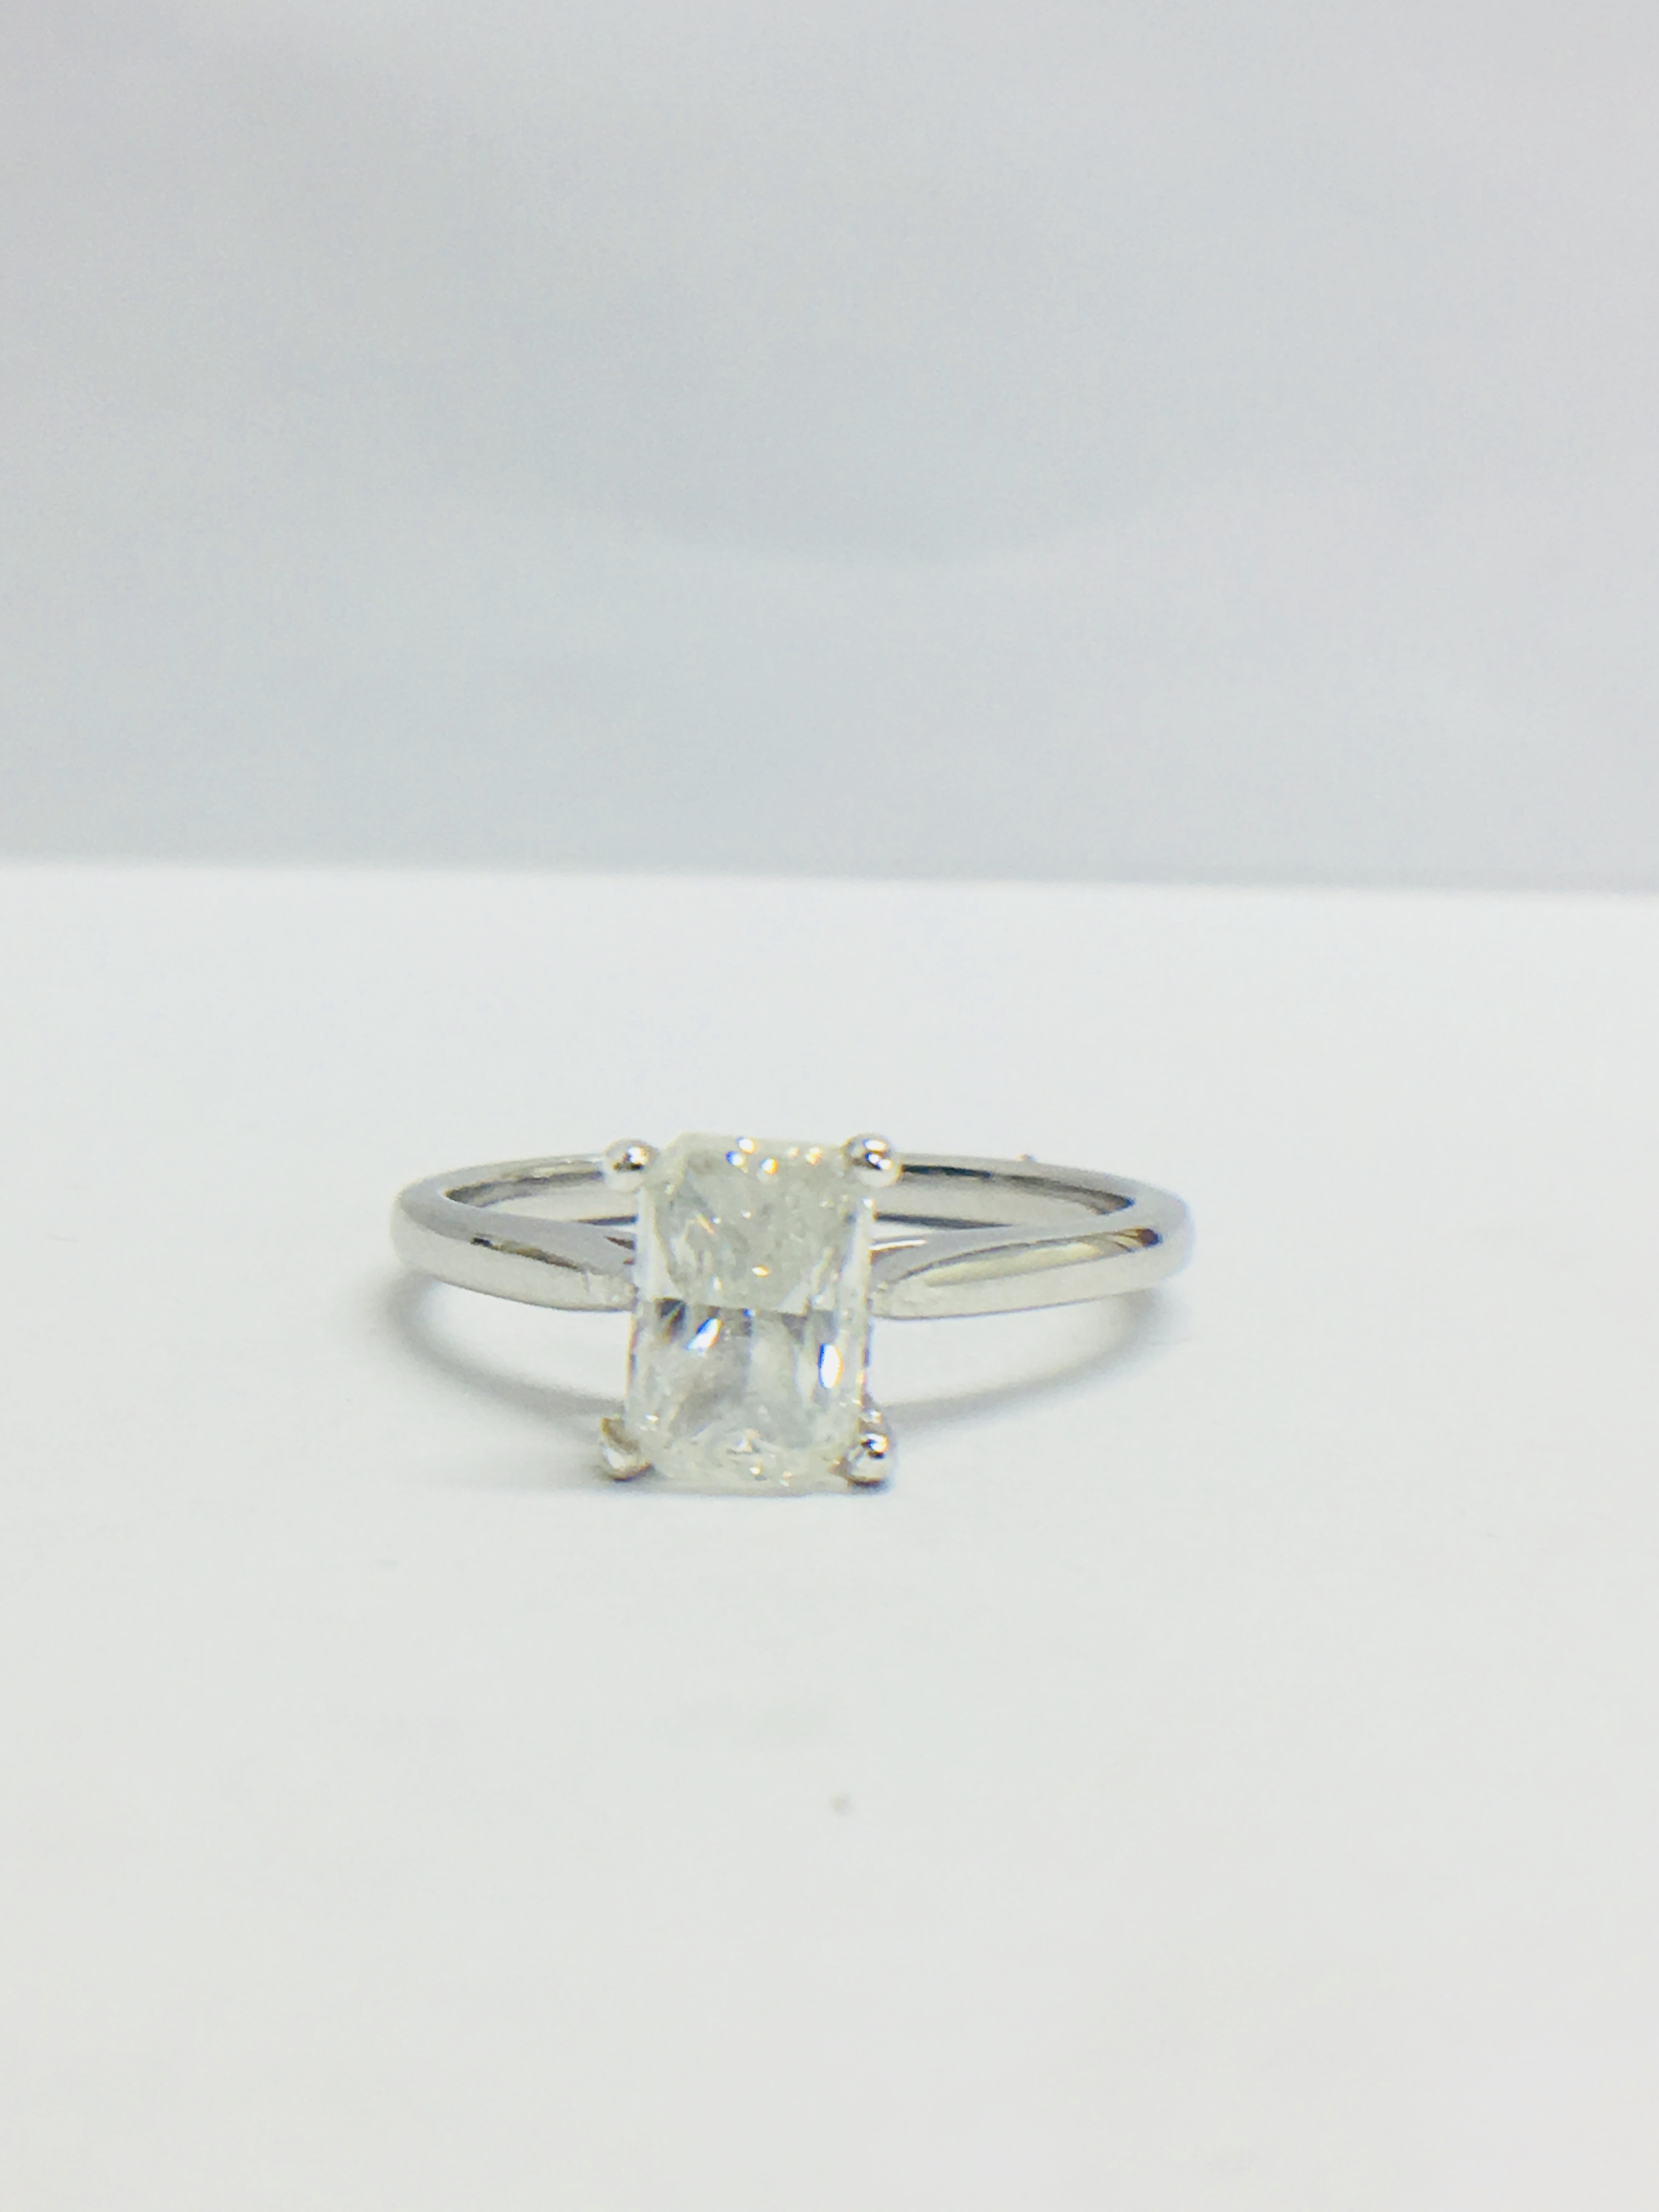 Platinum Oval Cut Diamond Solitaire Ring,